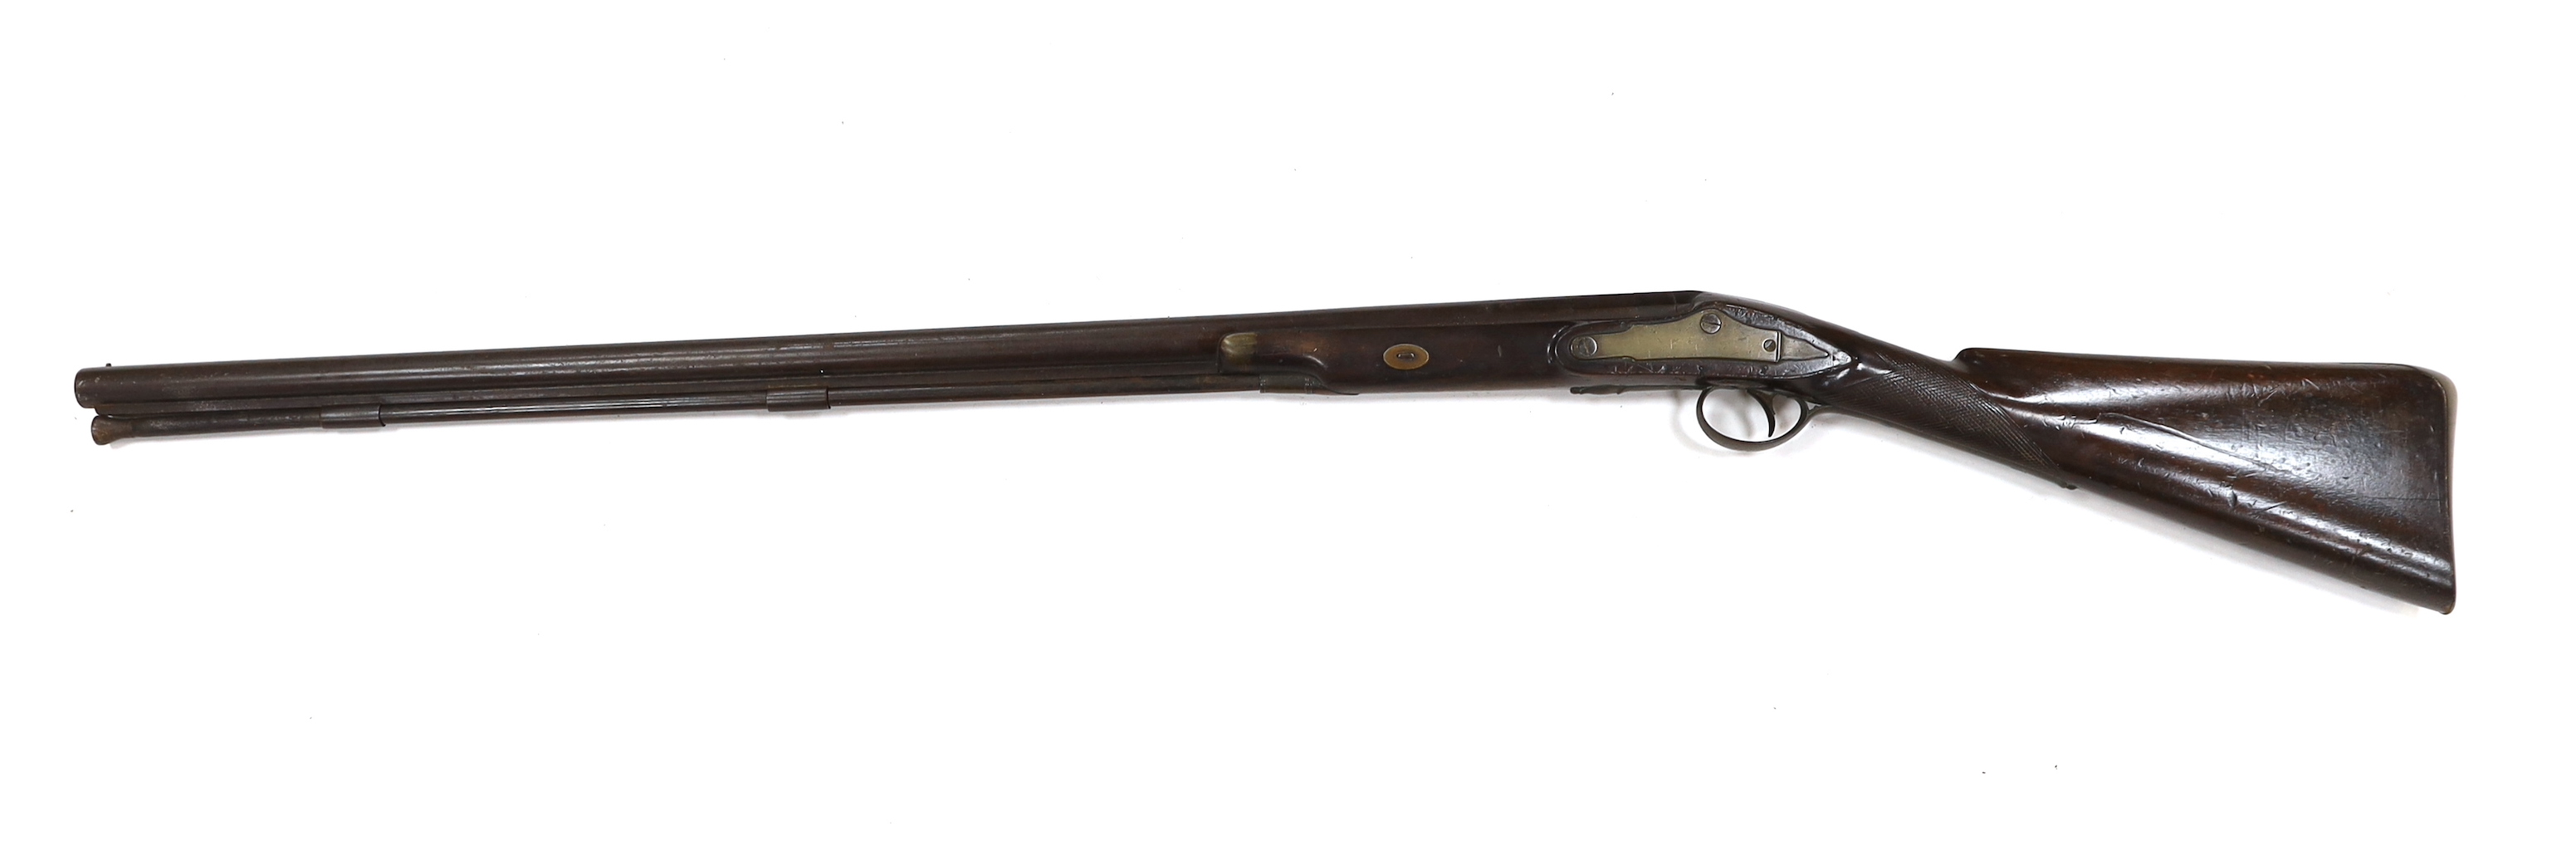 A mid 19th century percussion sporting gun, engraved J.J. Leonard, barrel 81.5cm